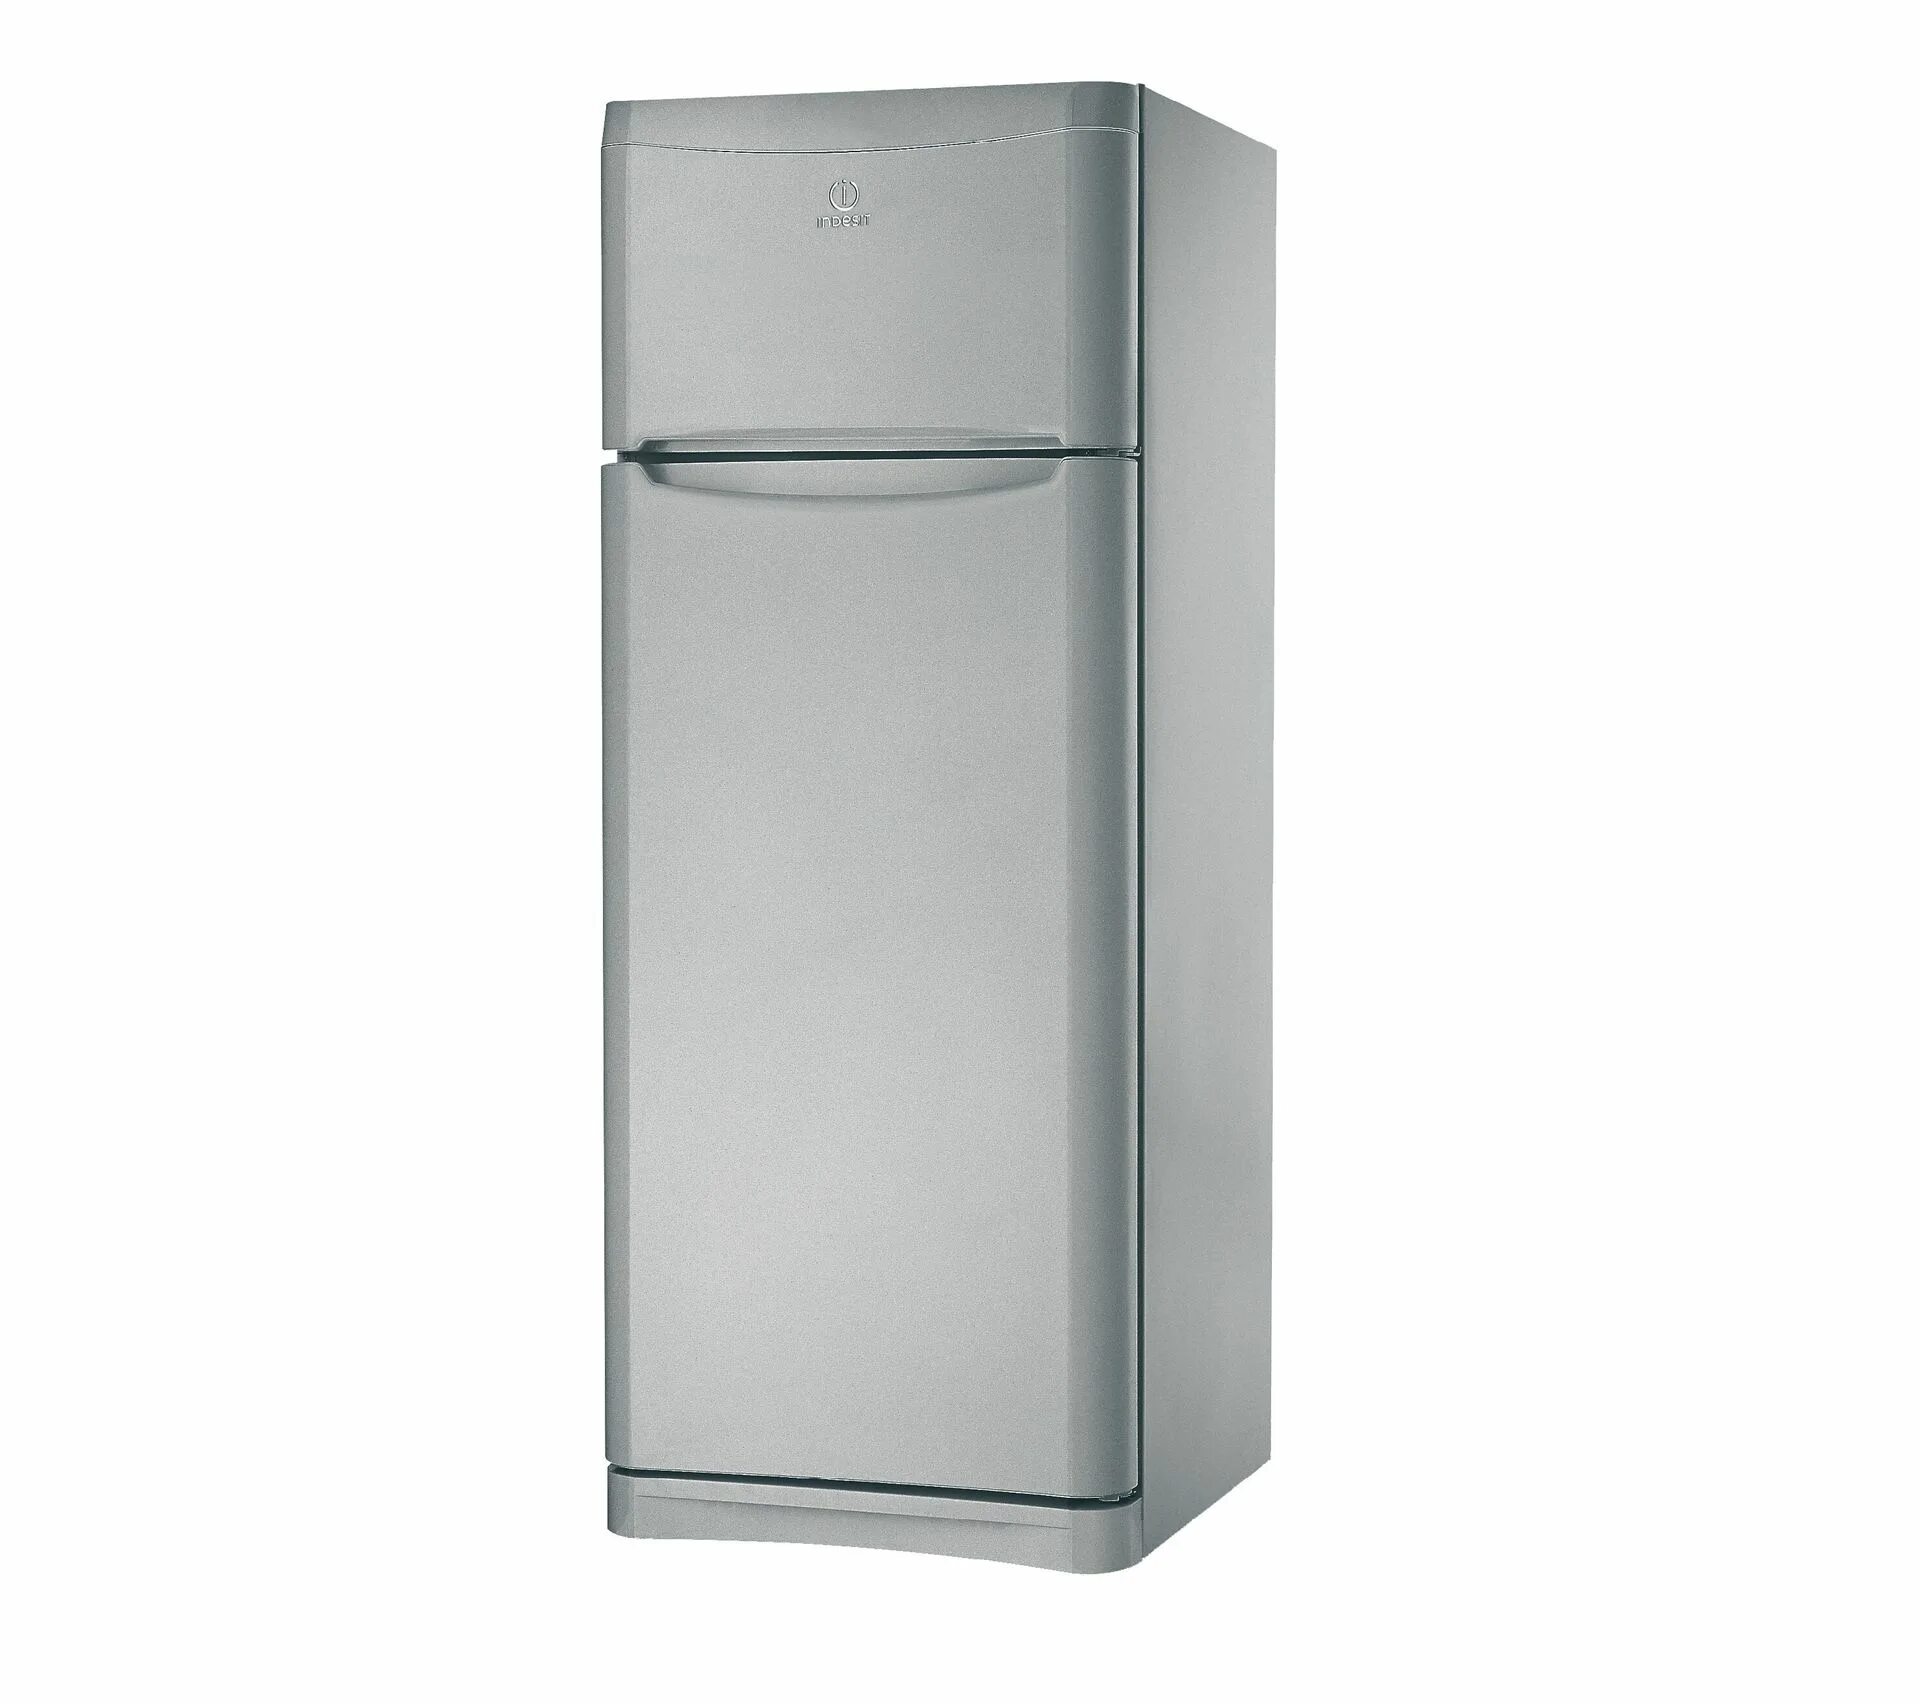 Холодильники no frost купить в москве. Холодильник Индезит ноу Фрост. Индезит no Frost холодильник 188 см.